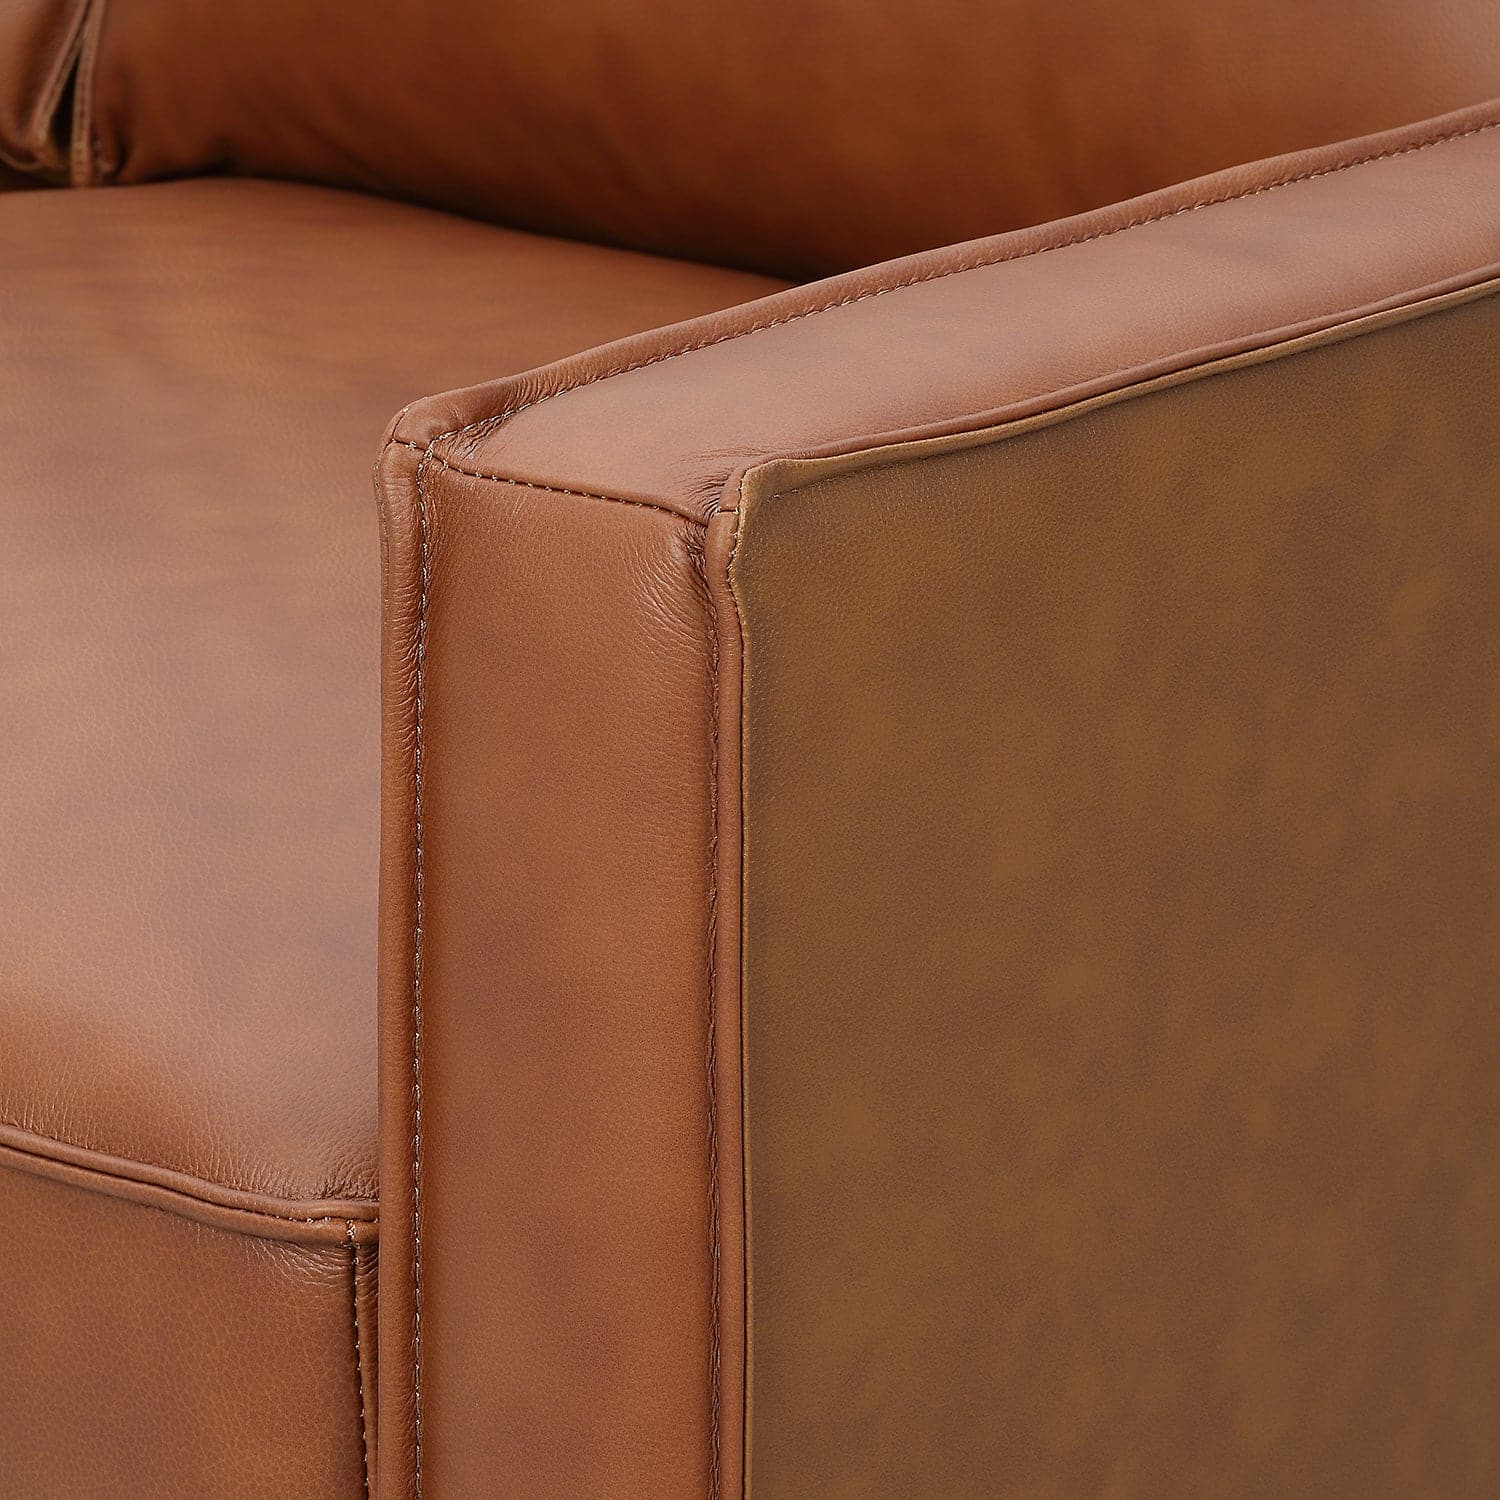 Pimlico Camel Brown Top Grain Leather 2 Pieces 1+3 Sofa Set